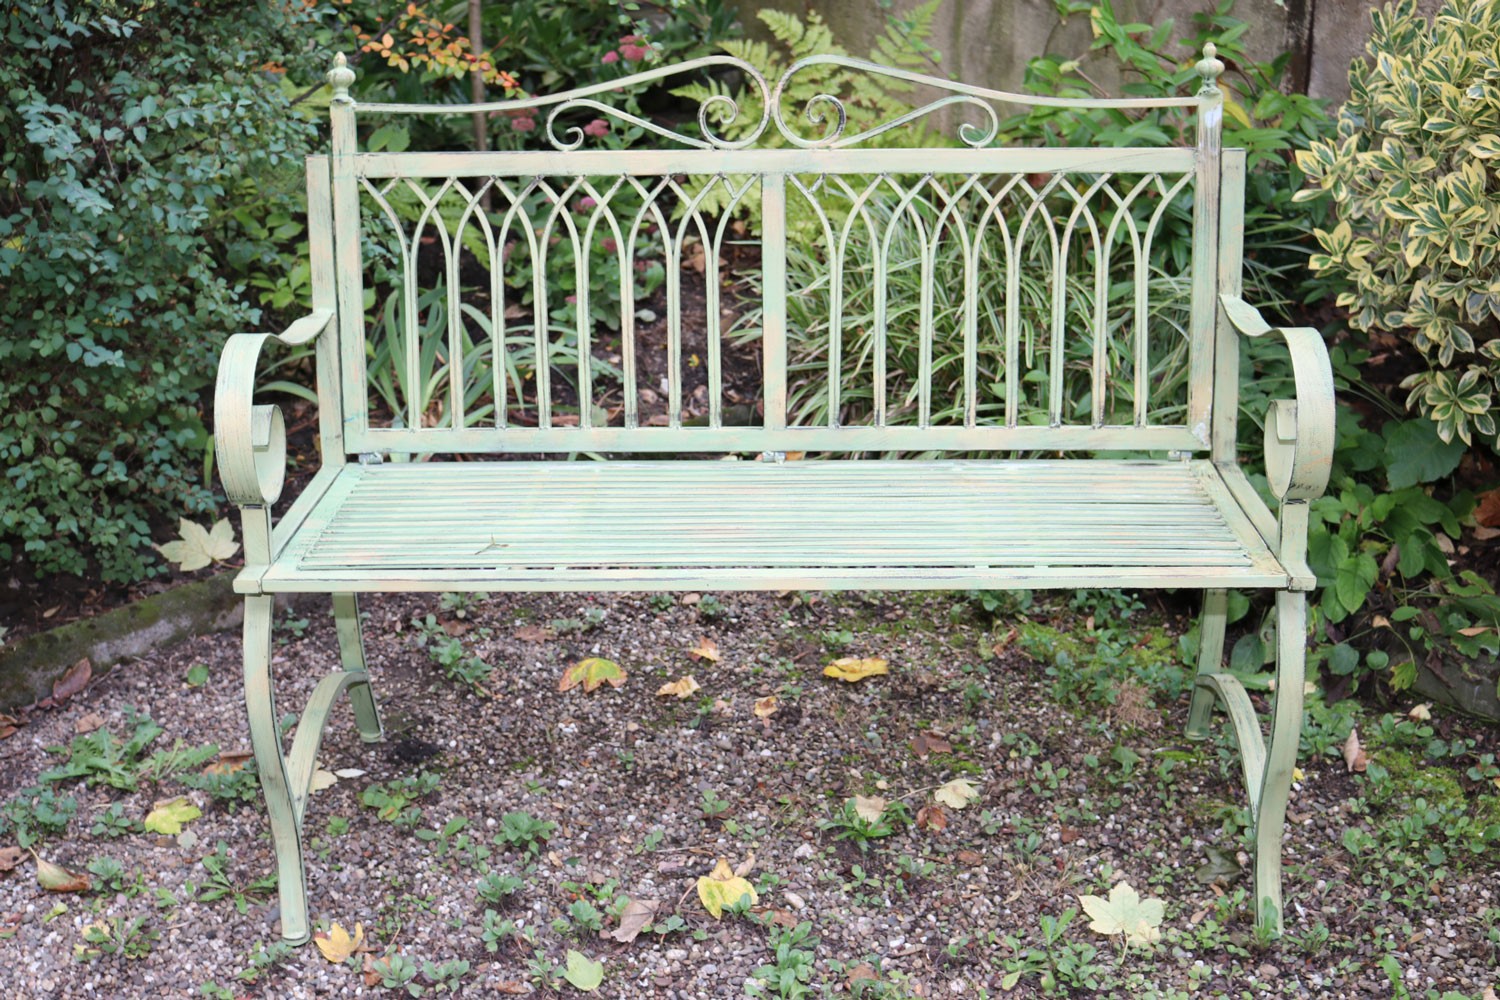  garden furniture sale uk only ebay